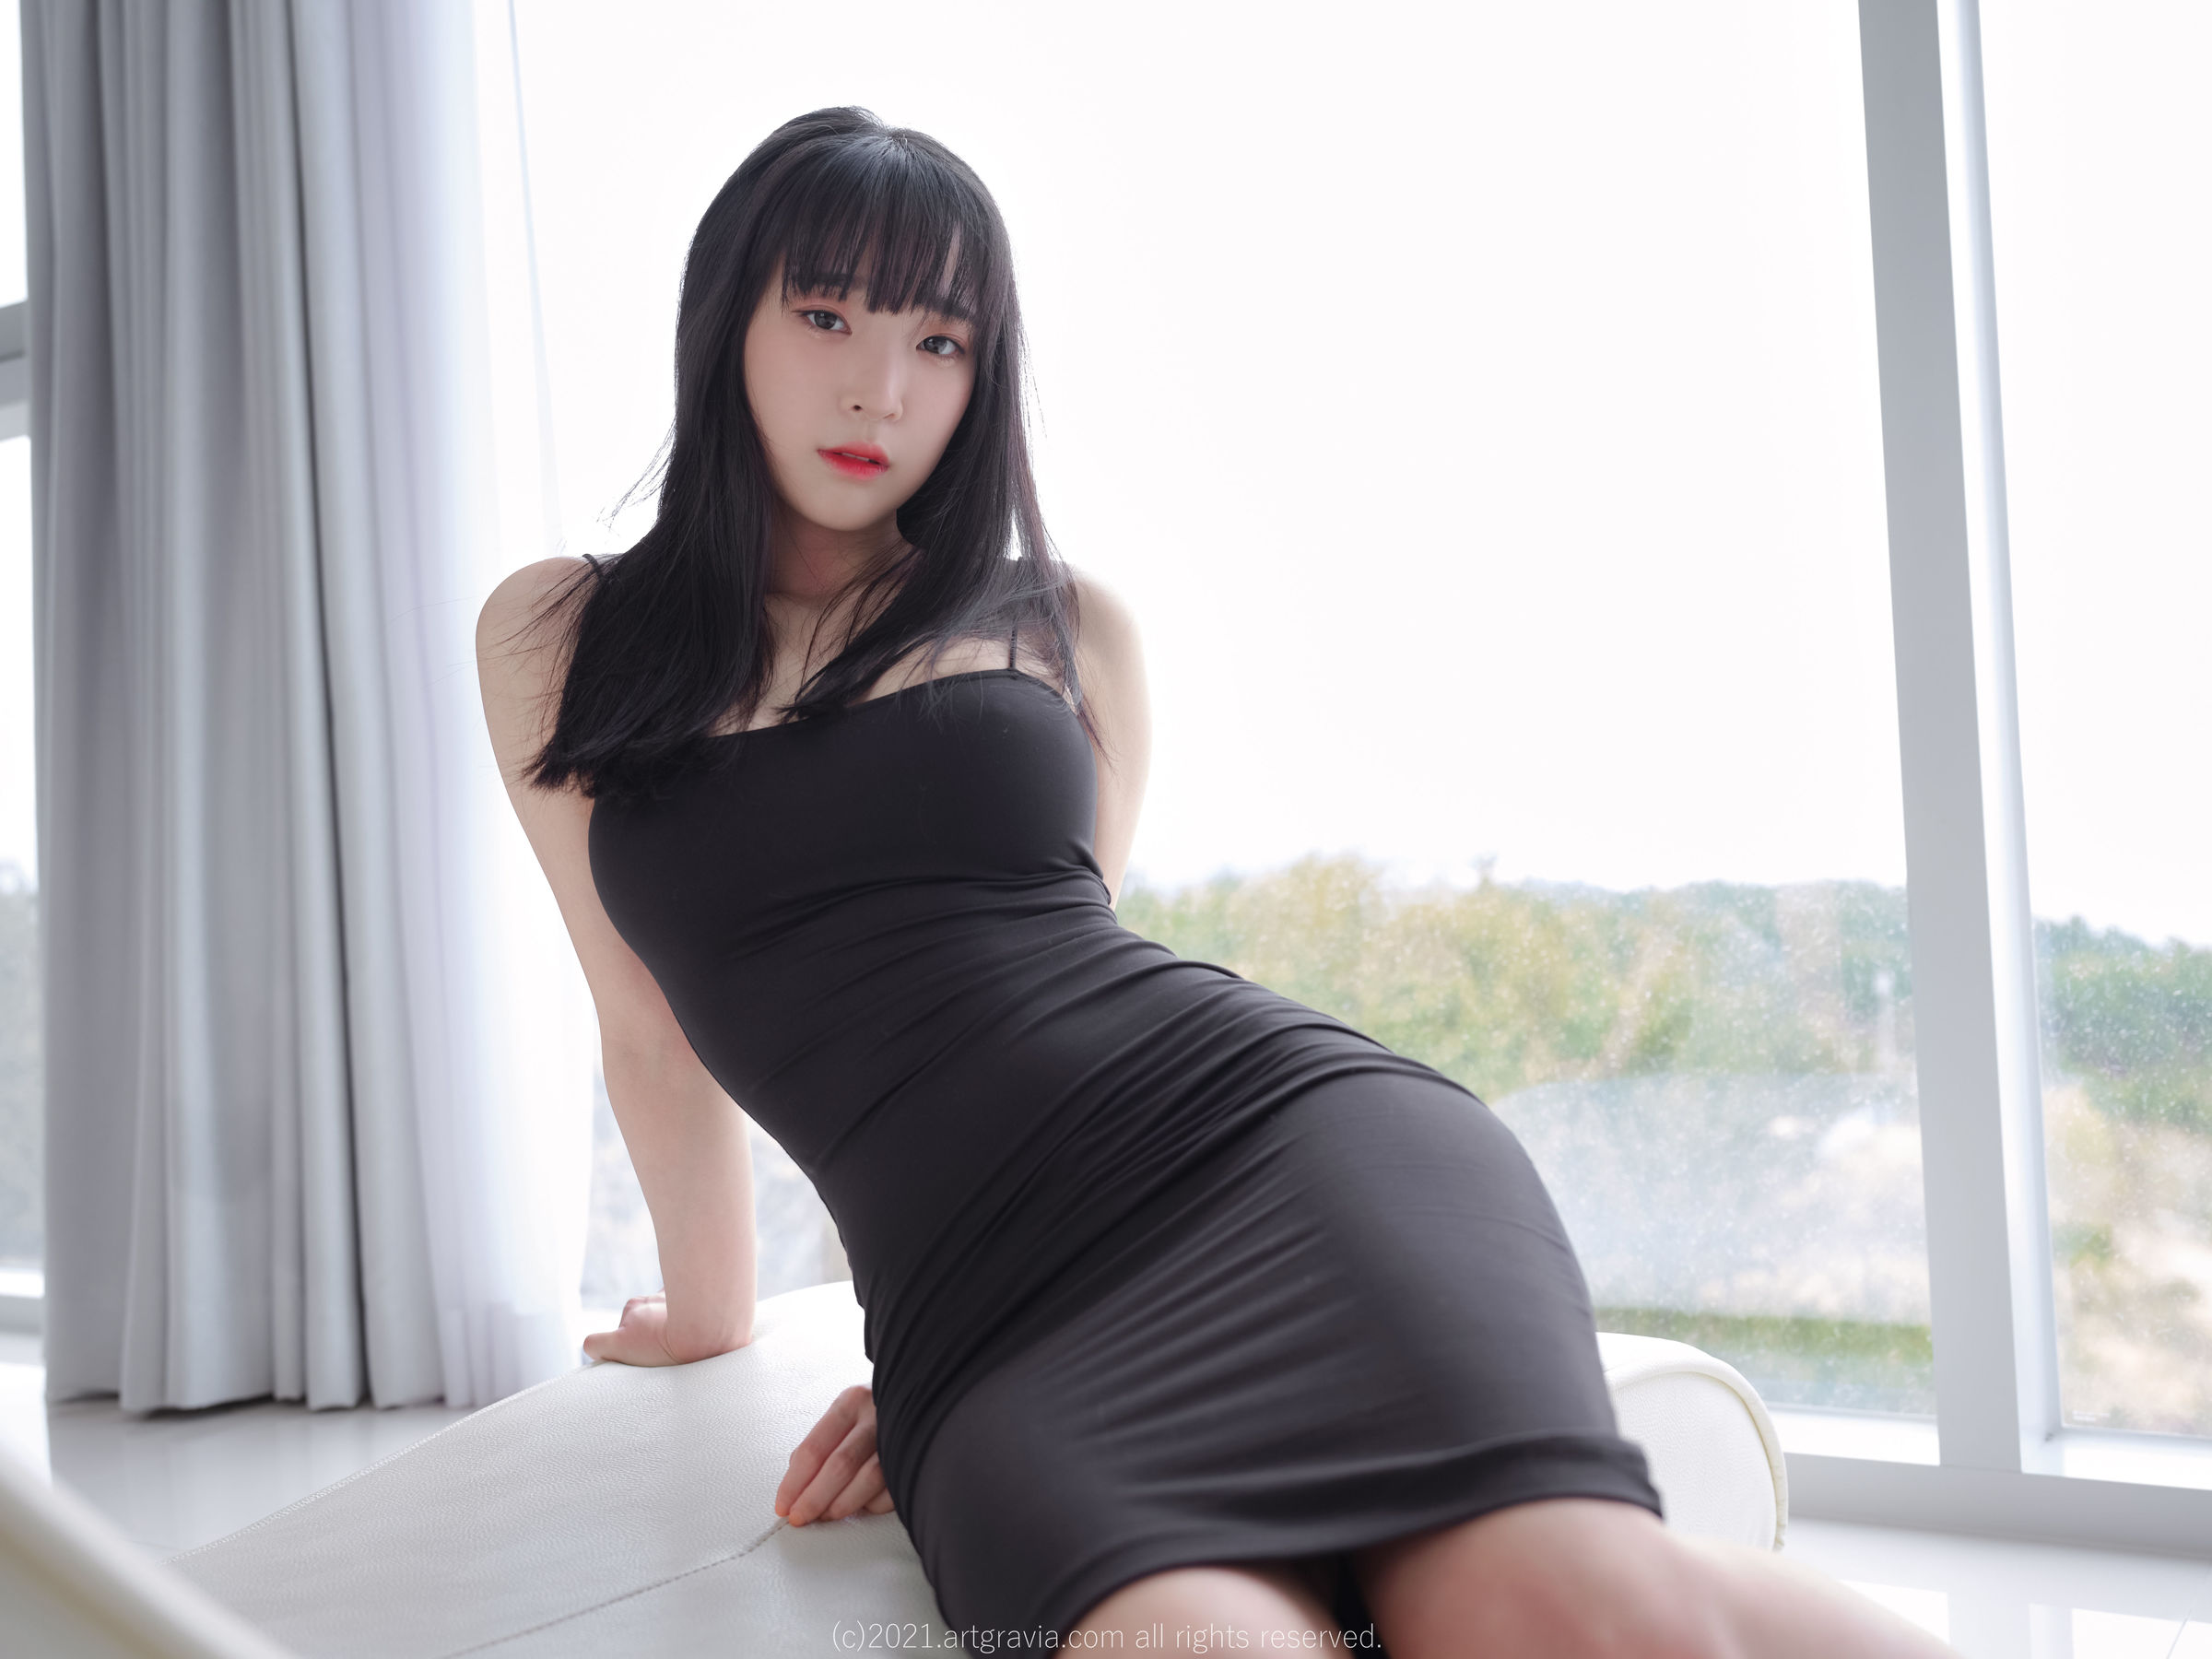 People 2400x1800 Jiang Ren Qing women brunette dress window sill black dress Asian